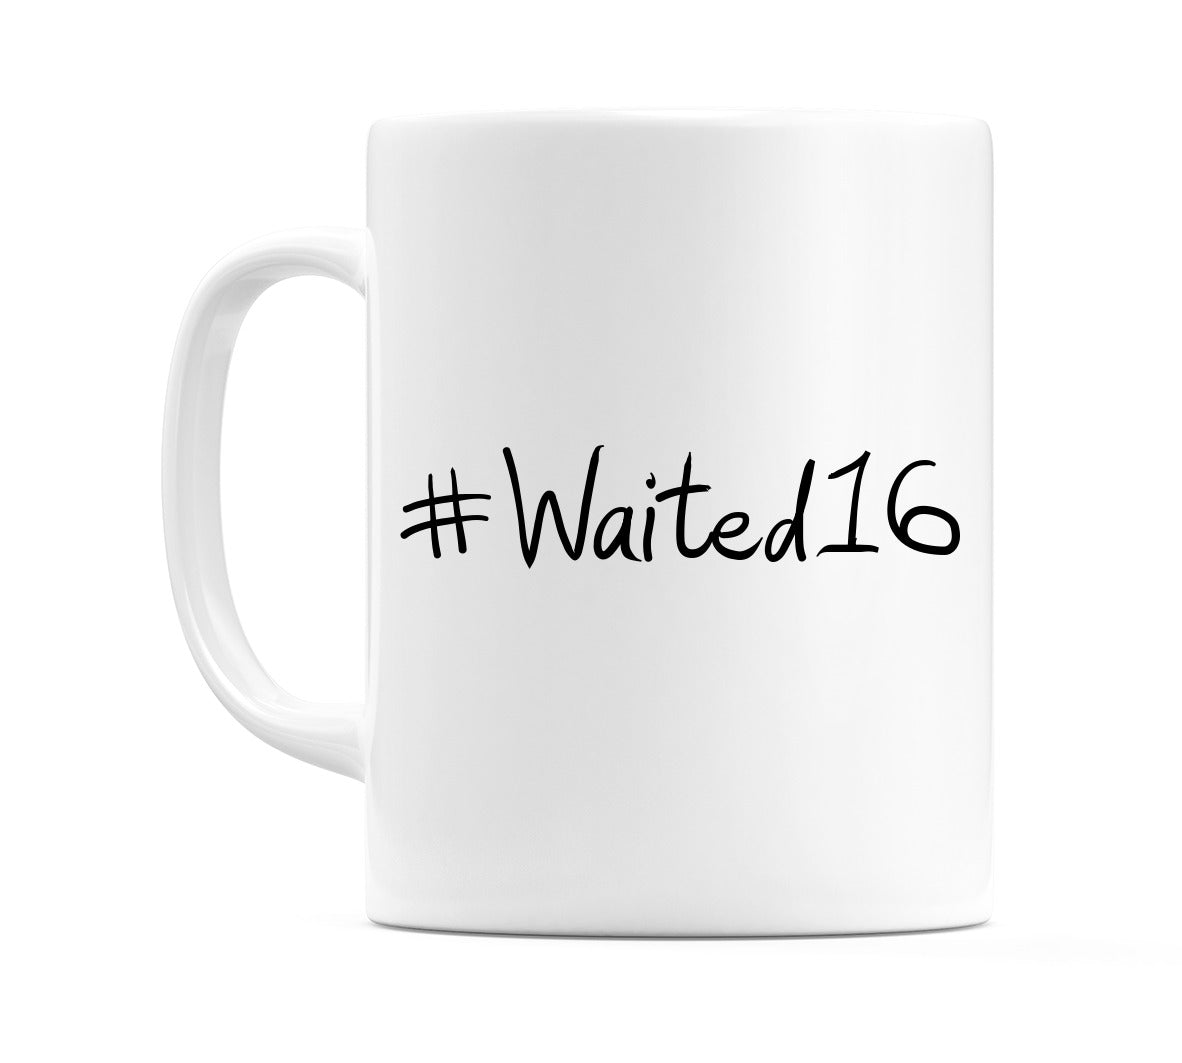 #Waited16 Mug